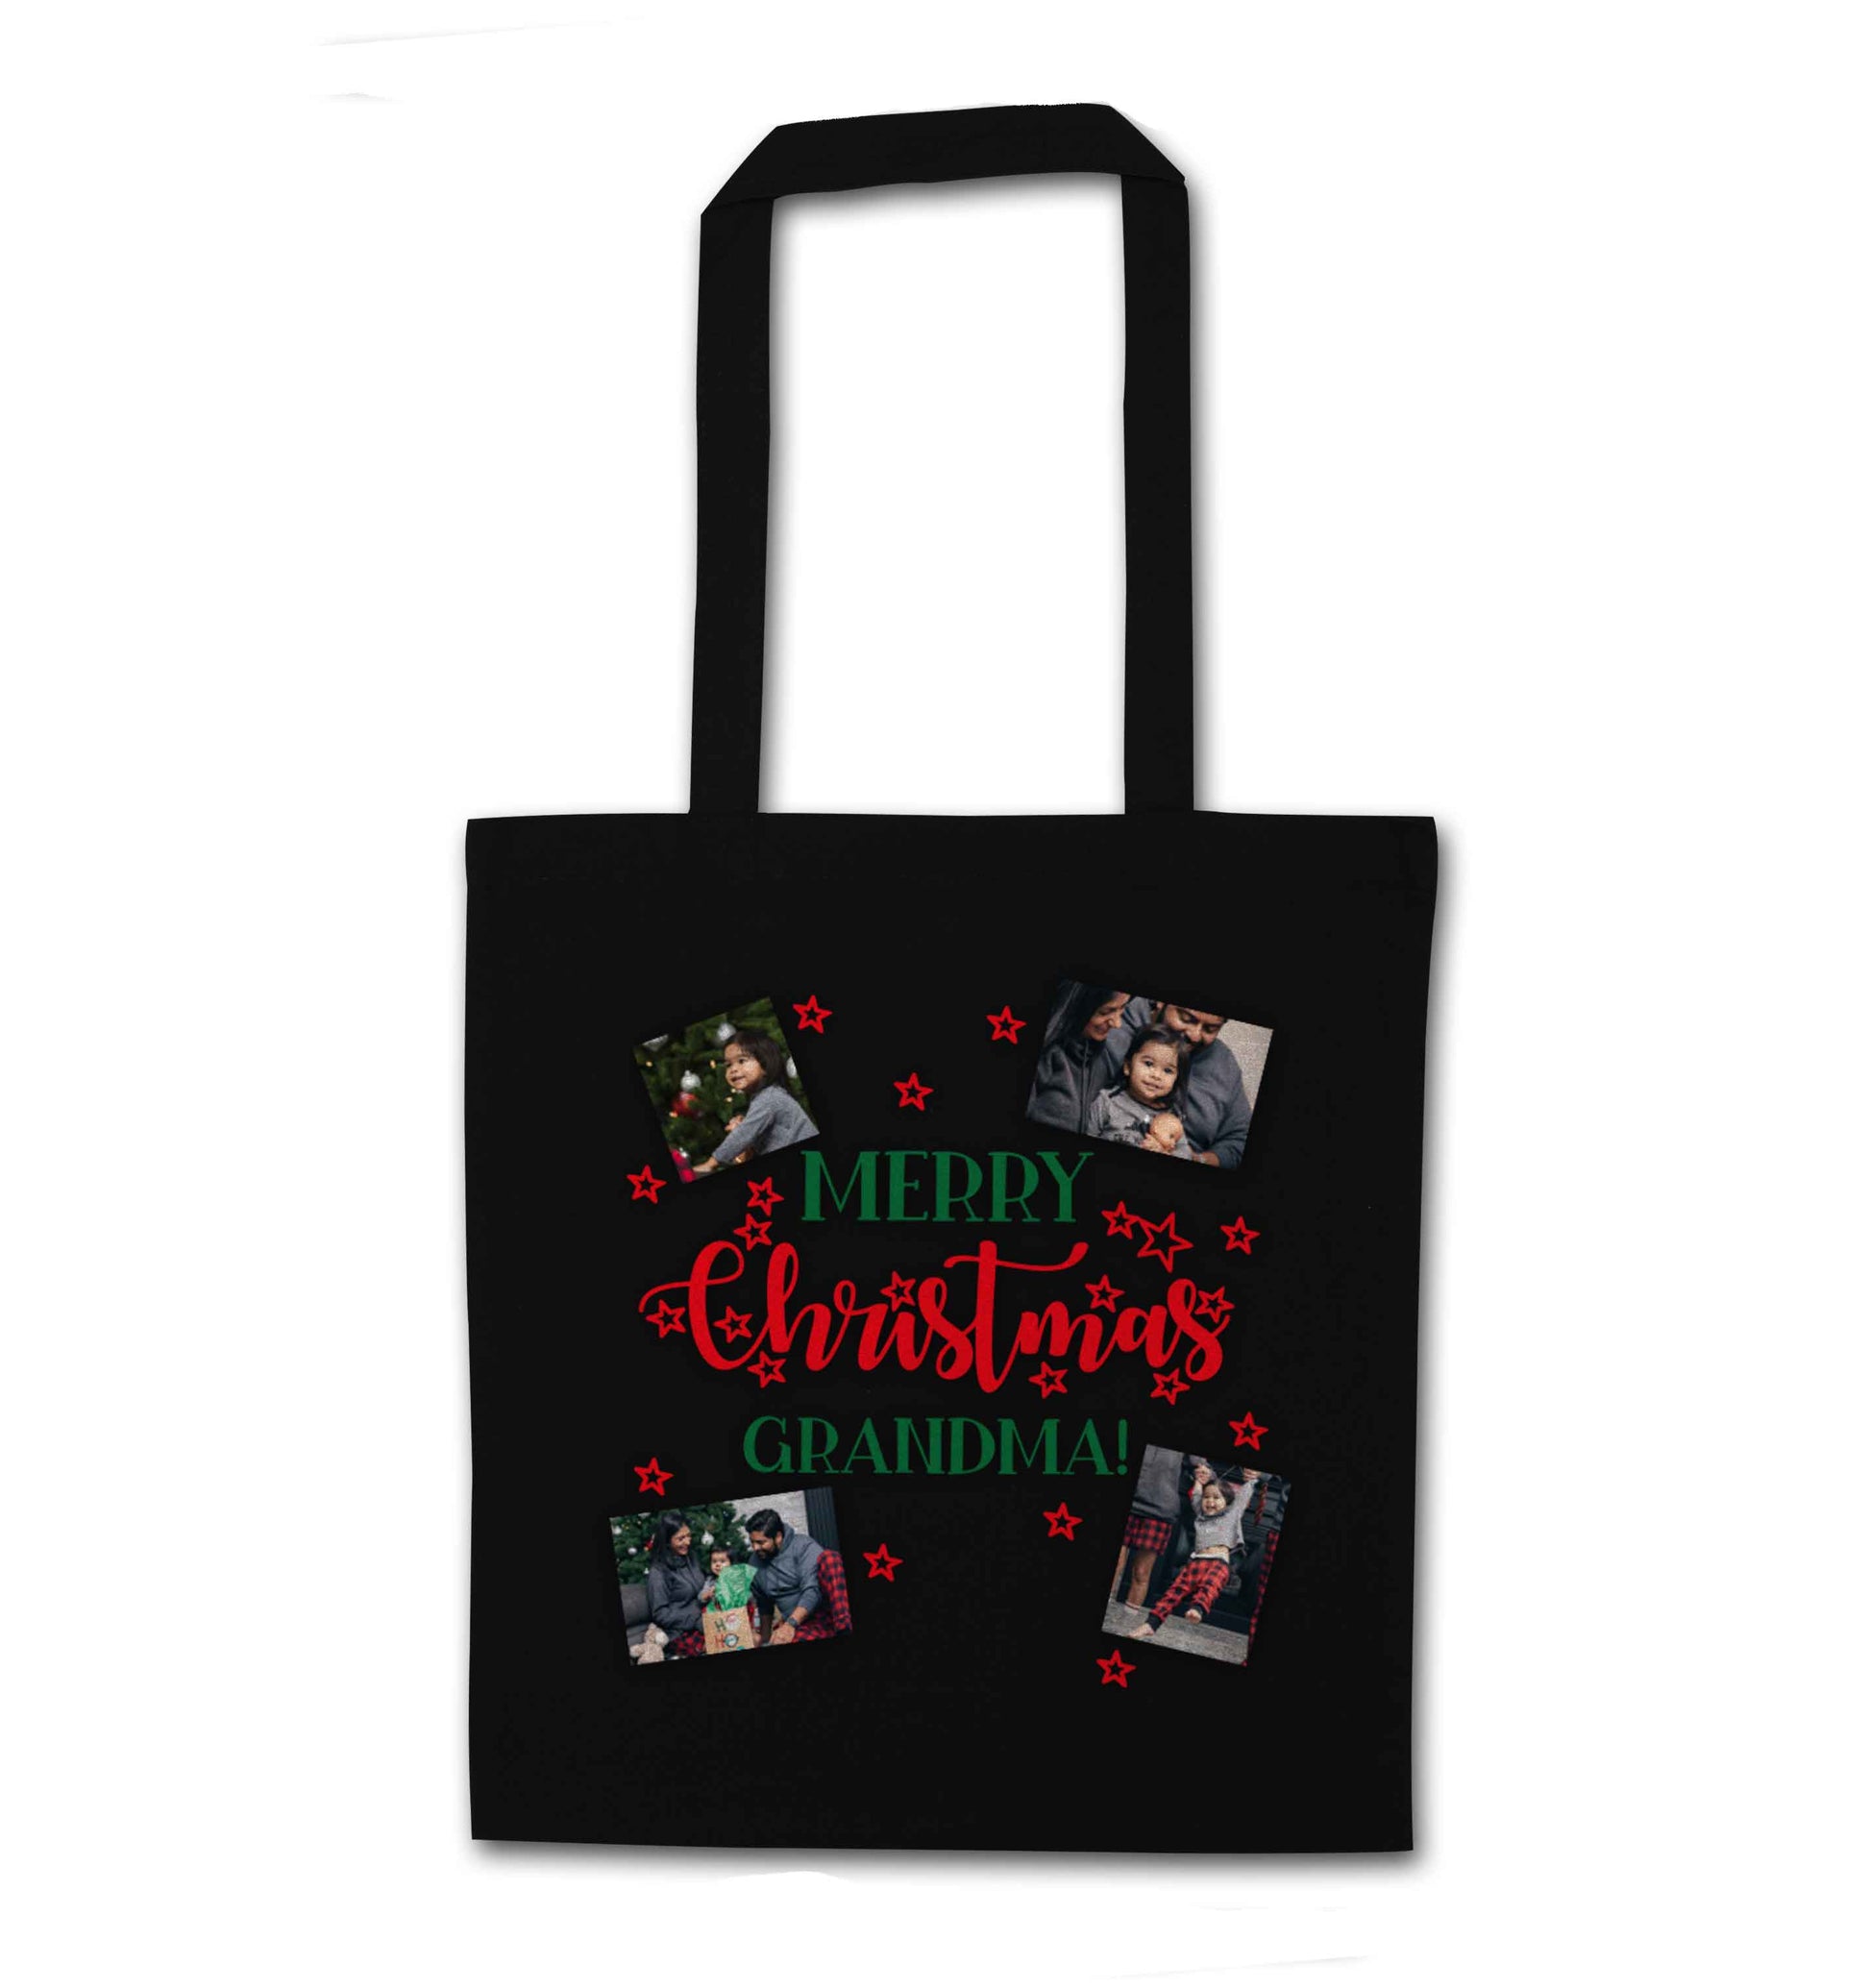 Merry Christmas grandma black tote bag